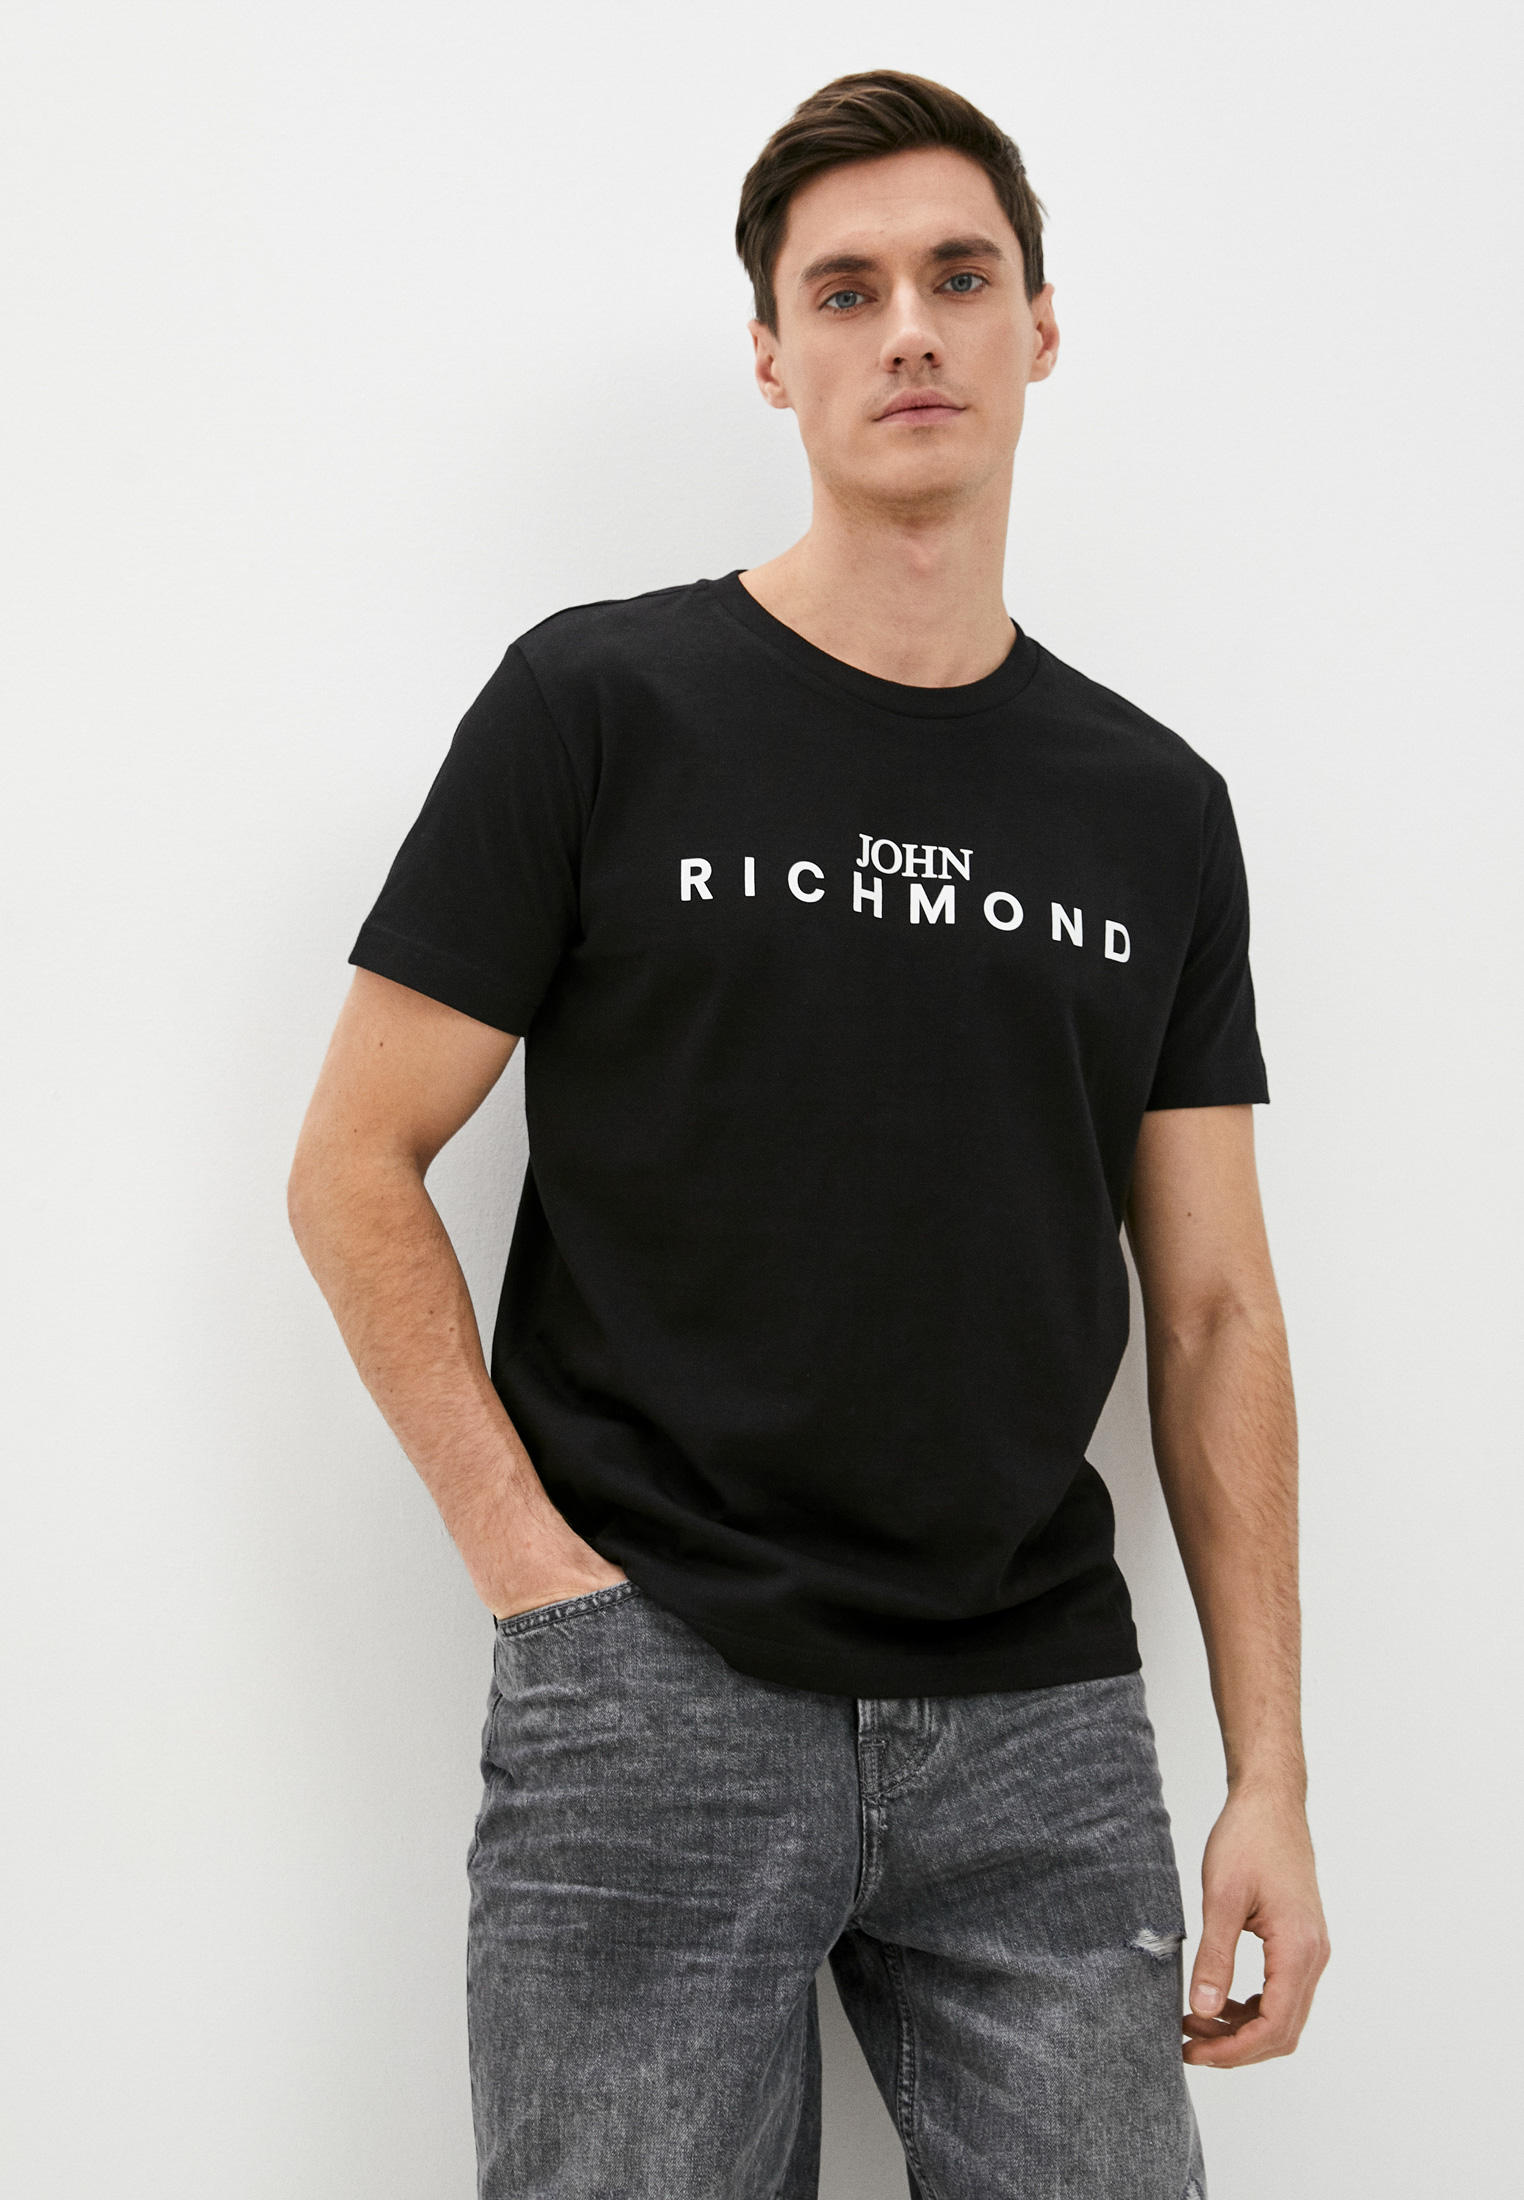 John richmond мужская. Джон Ричмонд футболка мужская. Бренд John Richmond футболки. John Richmond rma19029pa. Футболка Ричмонд 50%.